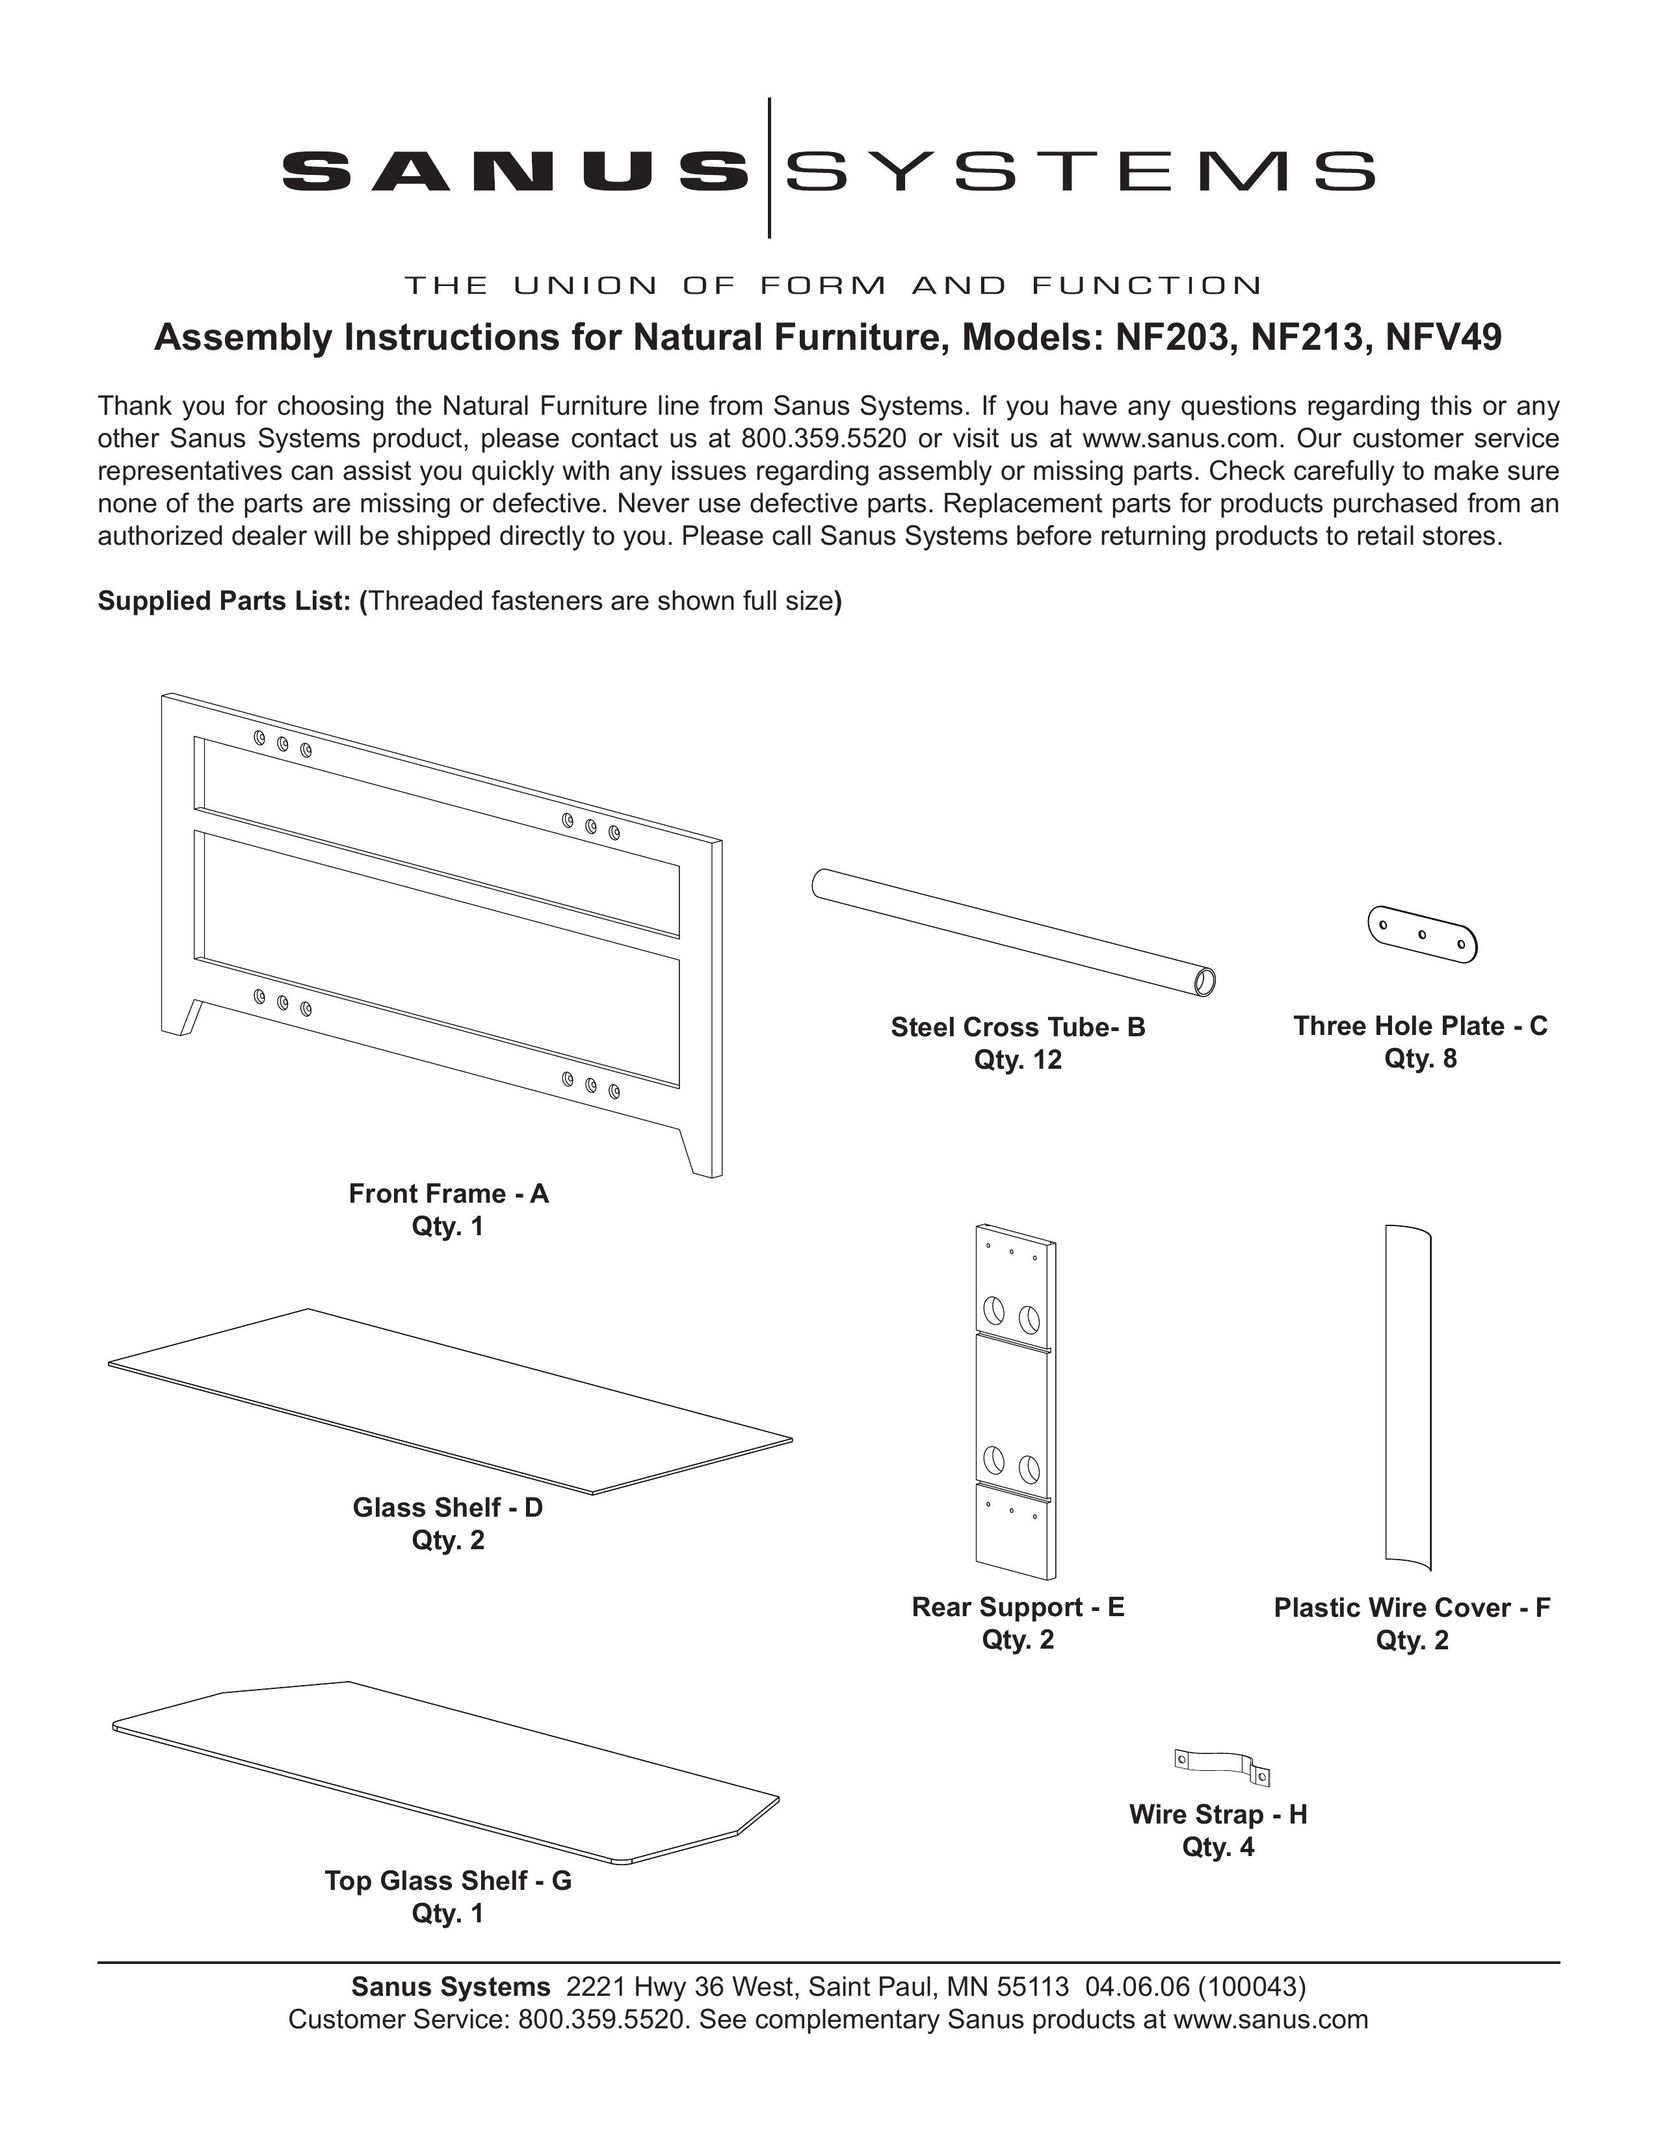 Sanus Systems NF203 Indoor Furnishings User Manual